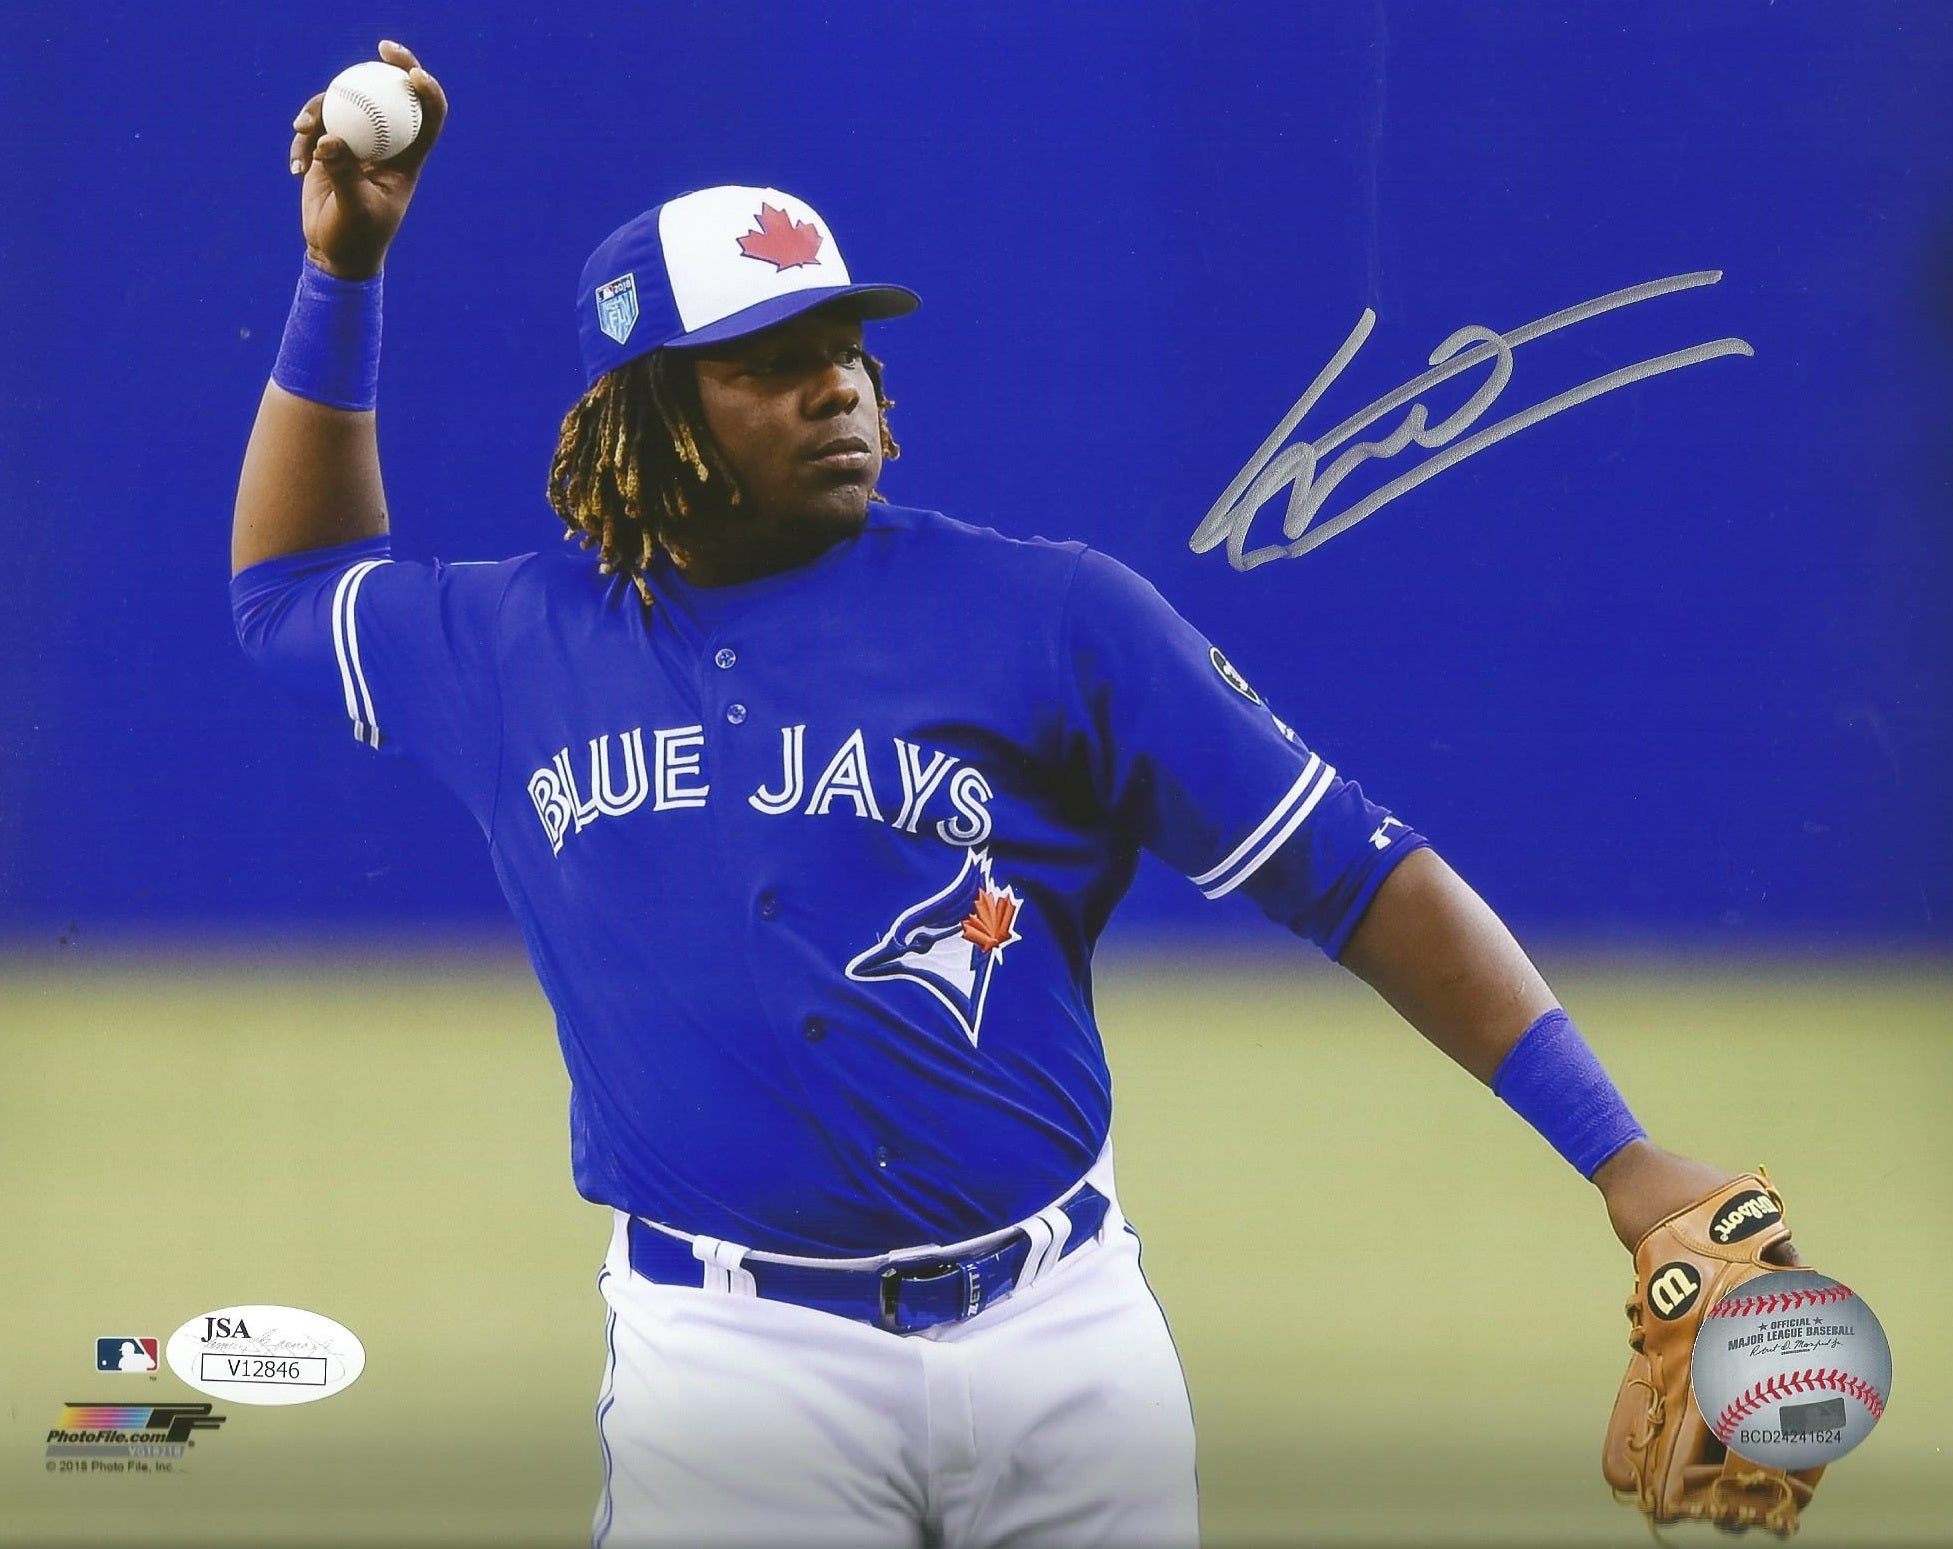 Vladimir Guerrero, Jr. Fielding Toronto Blue Jays Autographed MLB Baseball  Photo